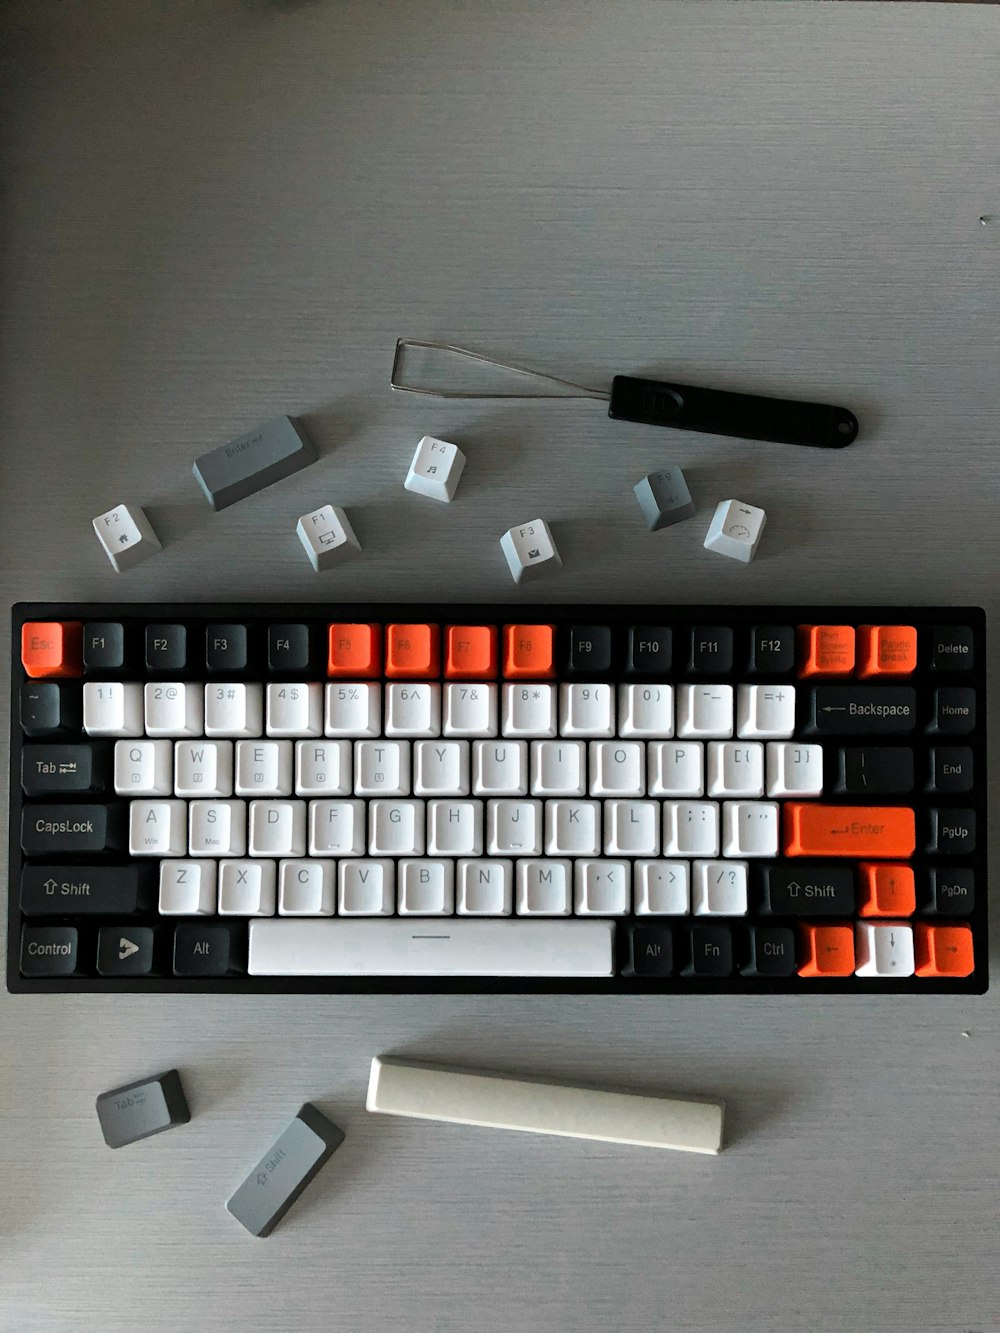 black and white computer keyboard